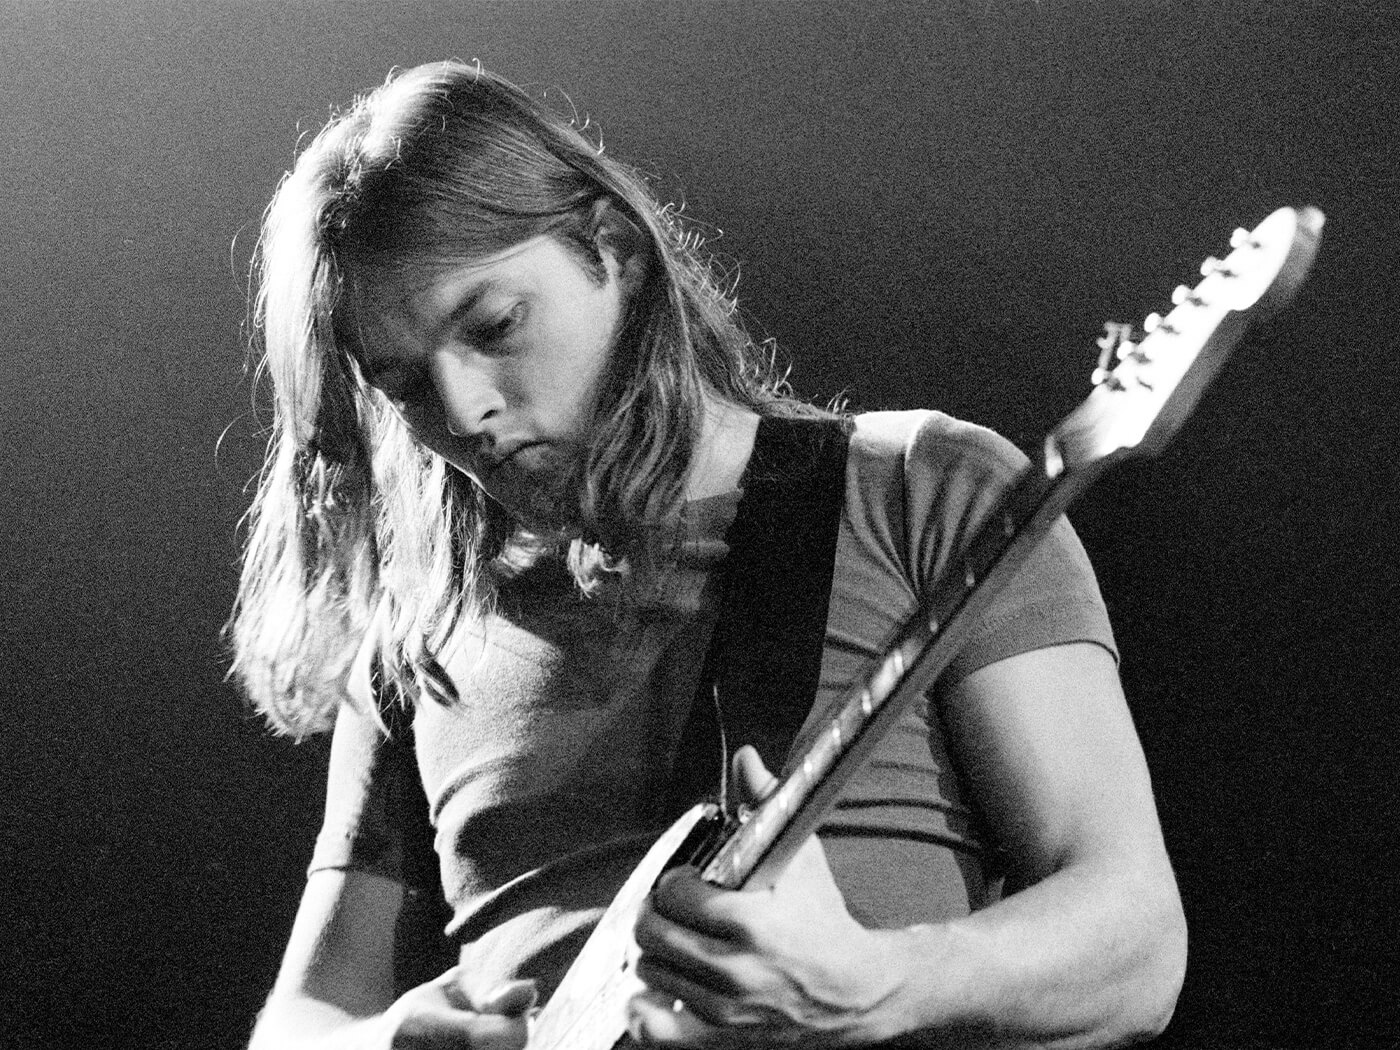 David Gilmour onstage 1971